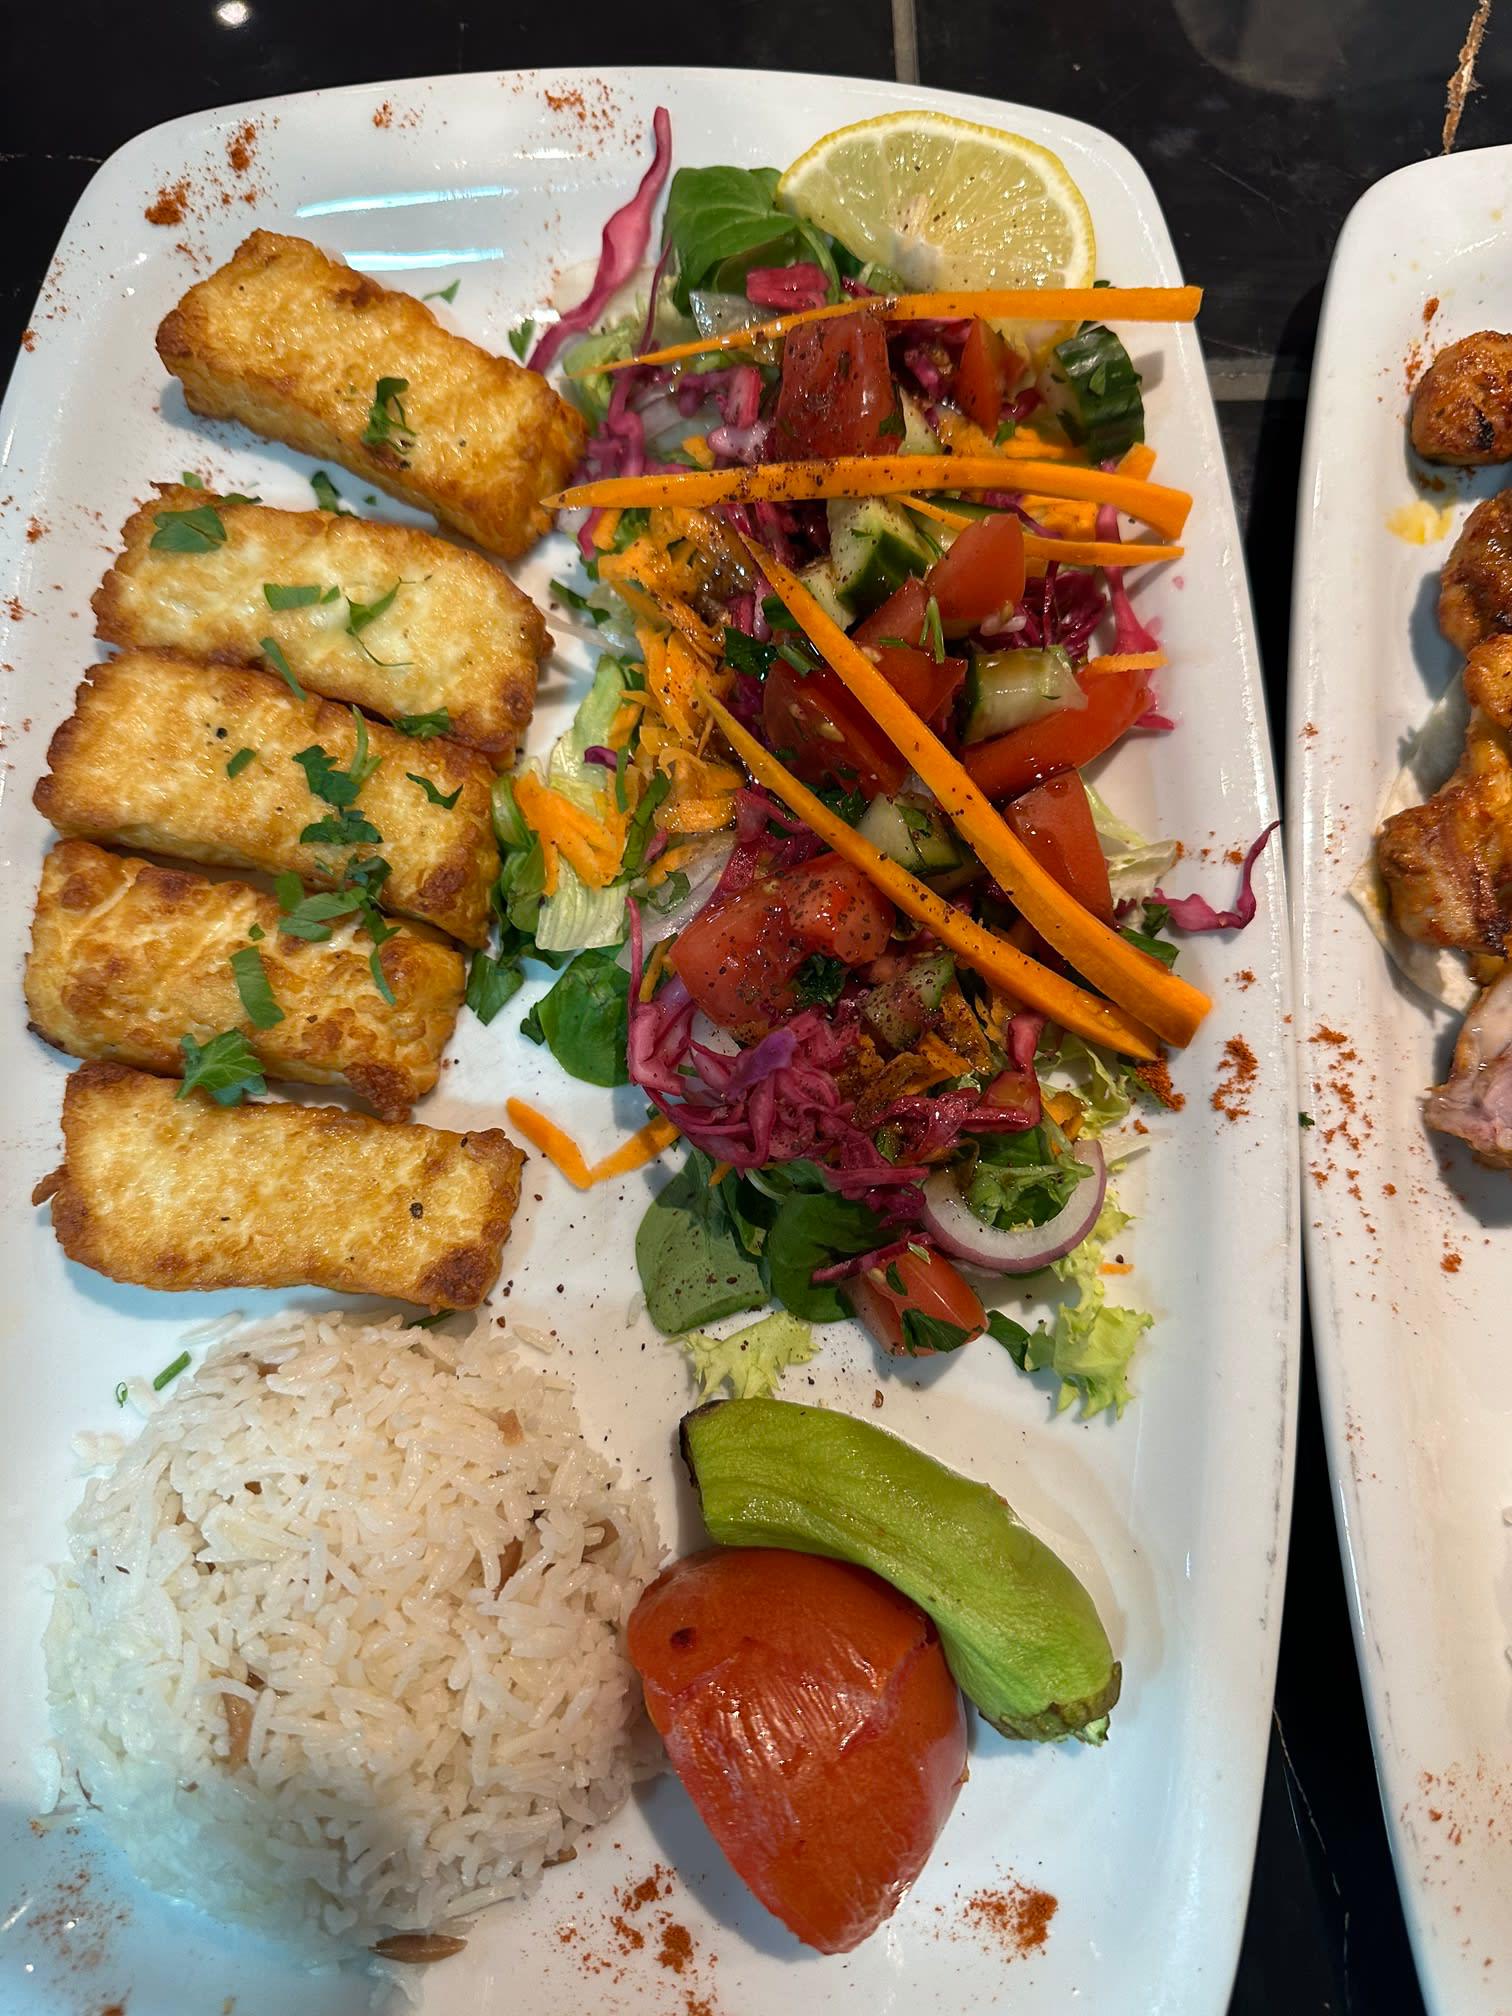 Pasha Turkish Restaurant Sheffield 01142 654414